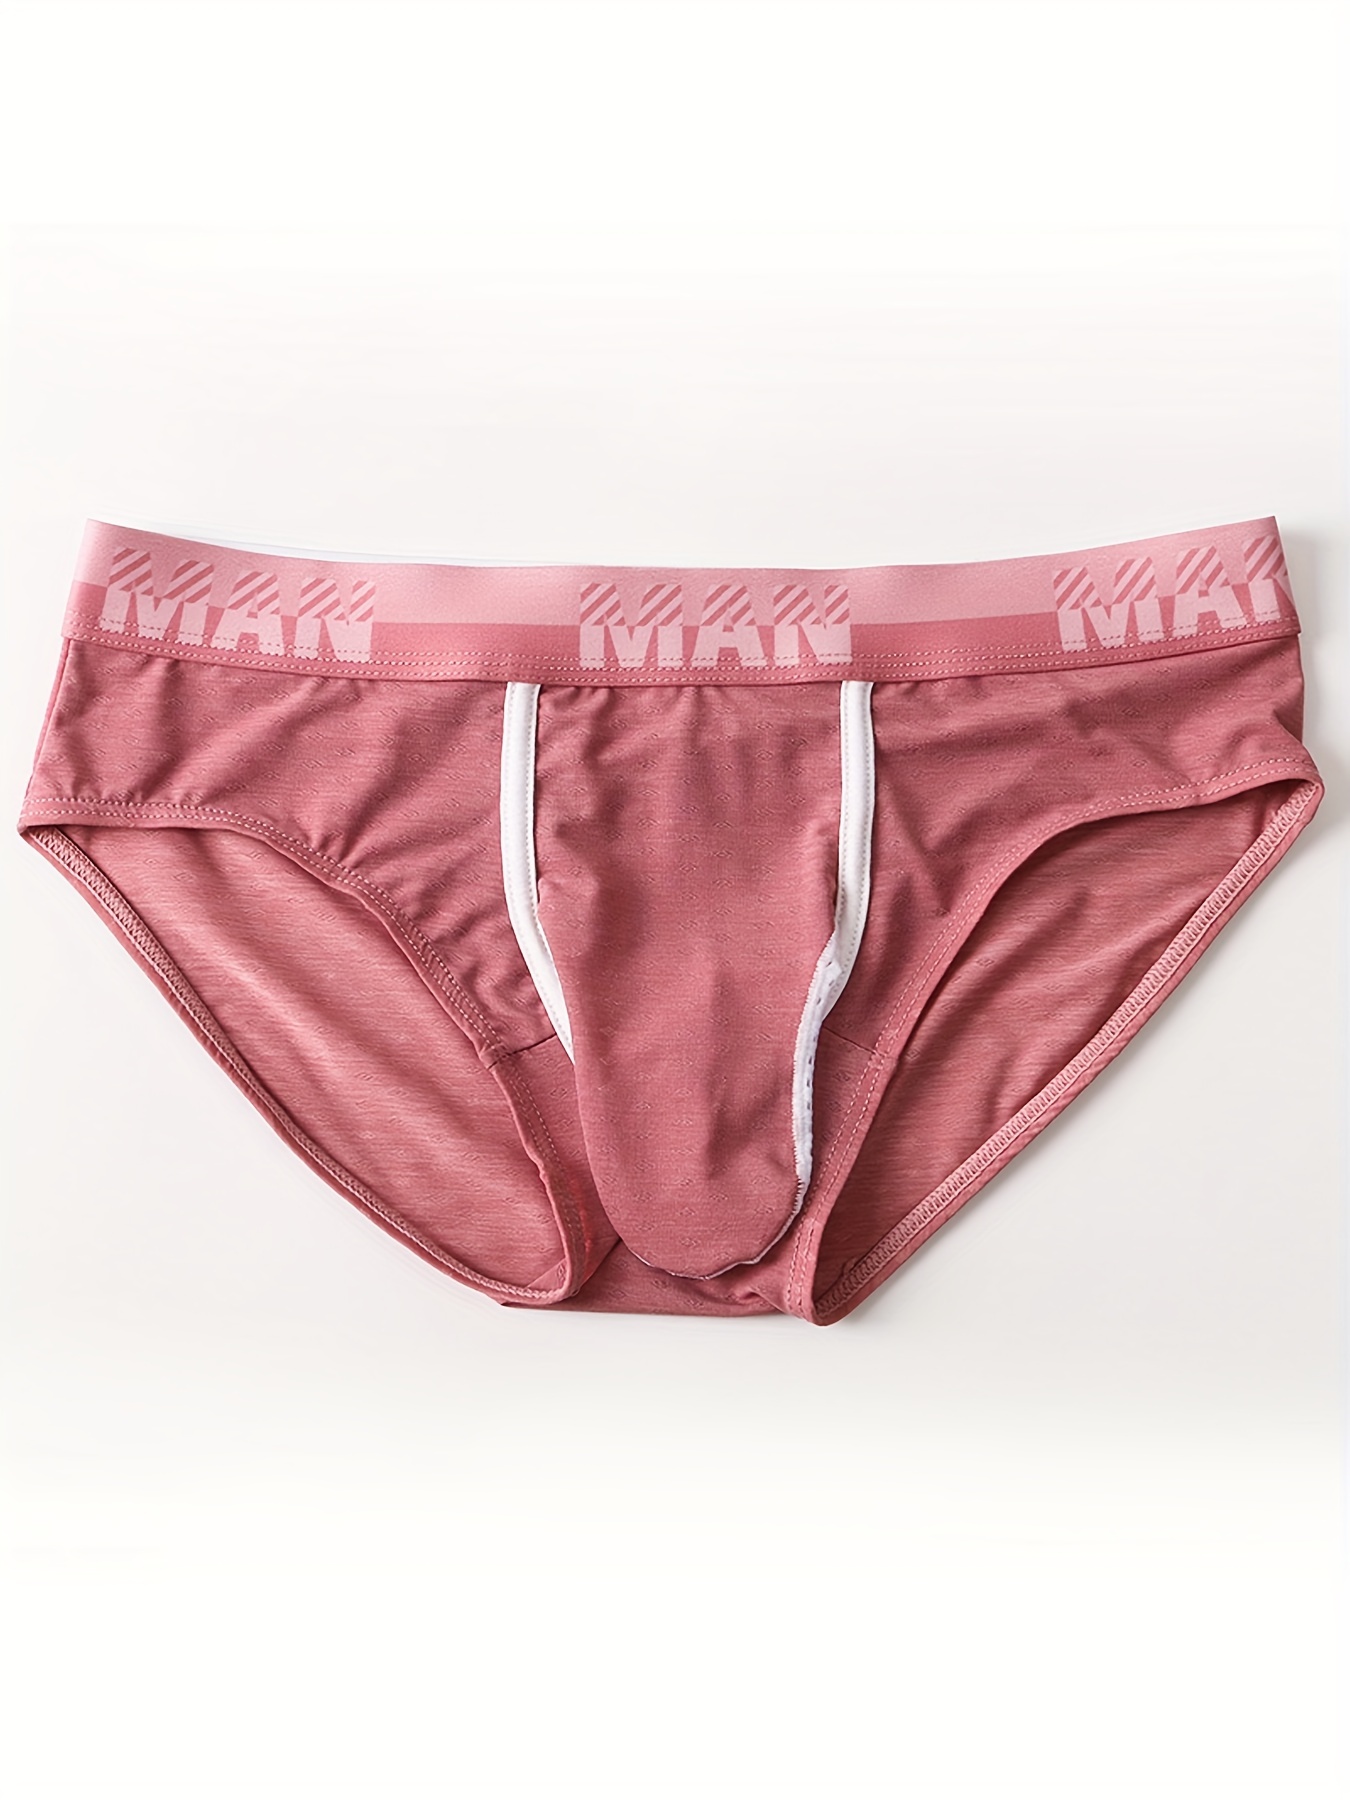 Men Briefs Low Waist underpant Solid Color Underwear Mesh